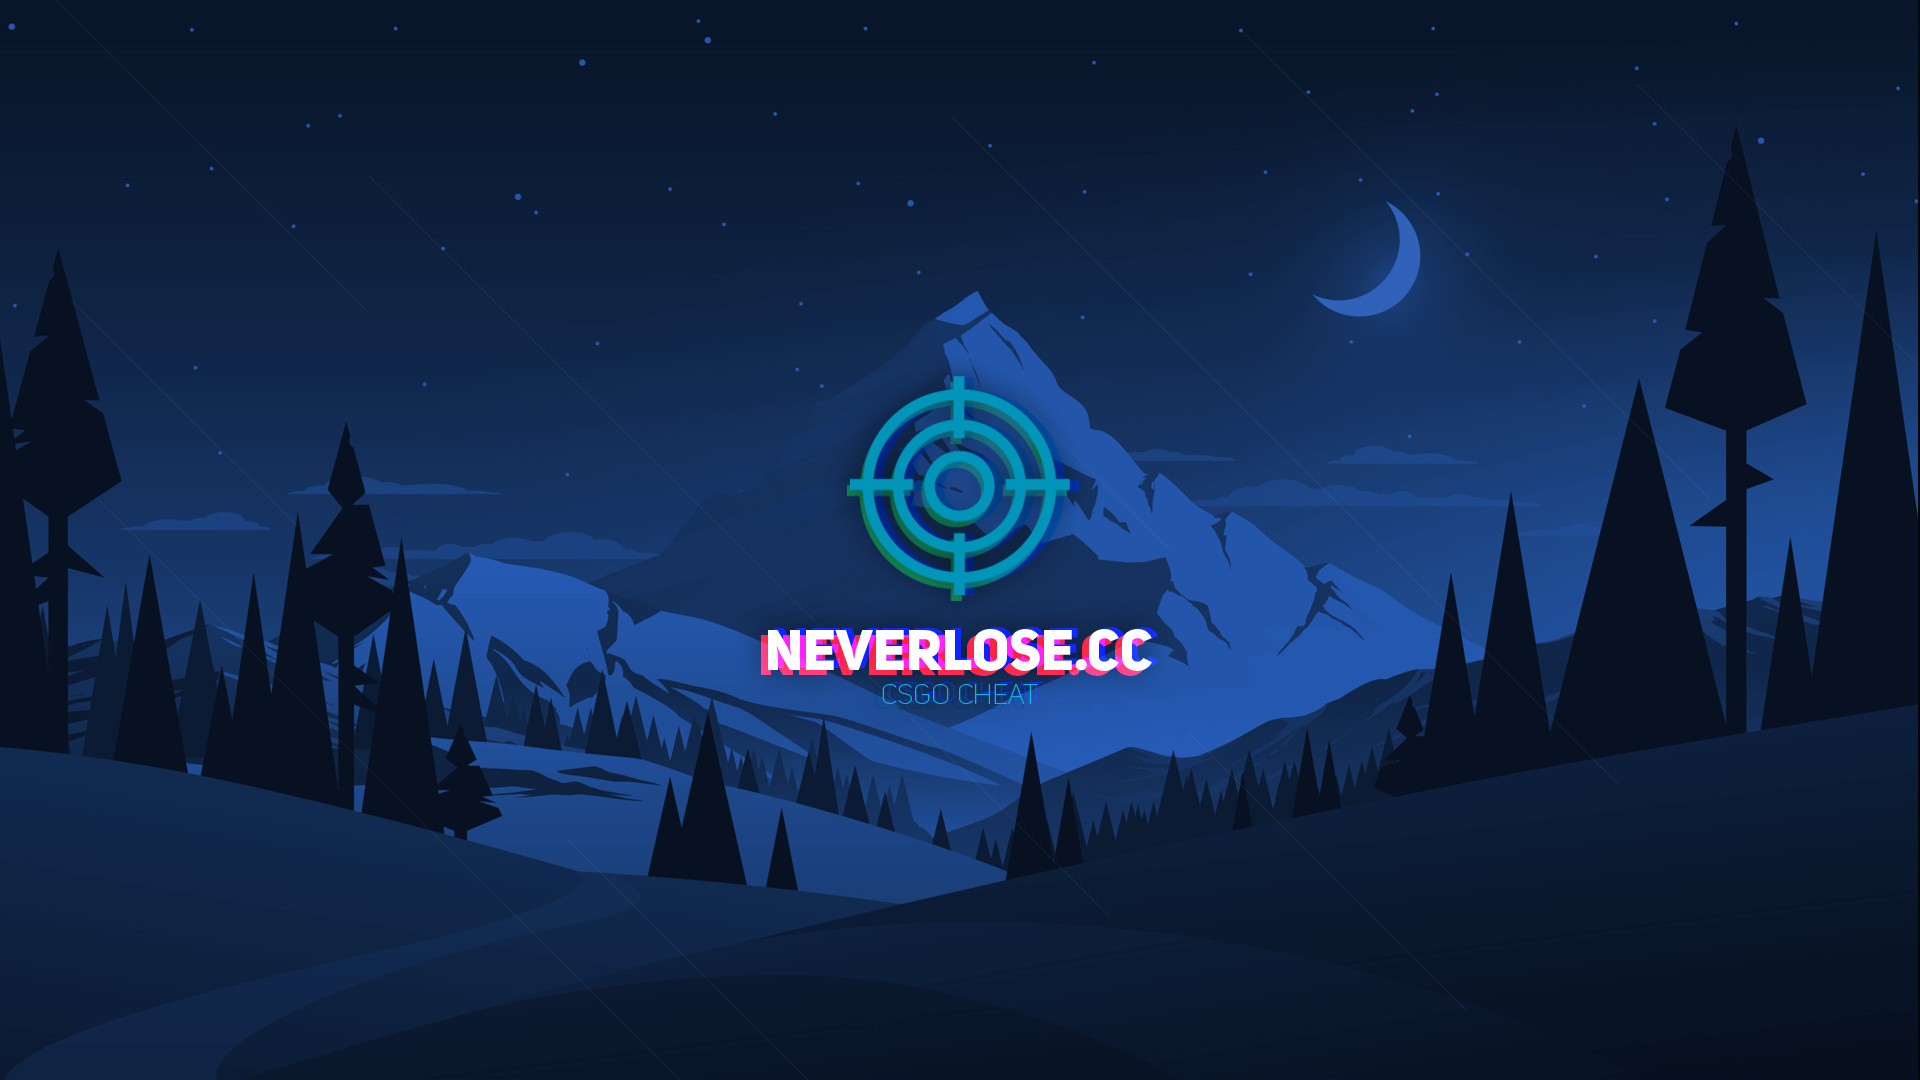 Https neverlose cc. Neverlose.cc v3. Обои на рабочий стол Neverlose. Фон неверлуза. Neverlose логотип.